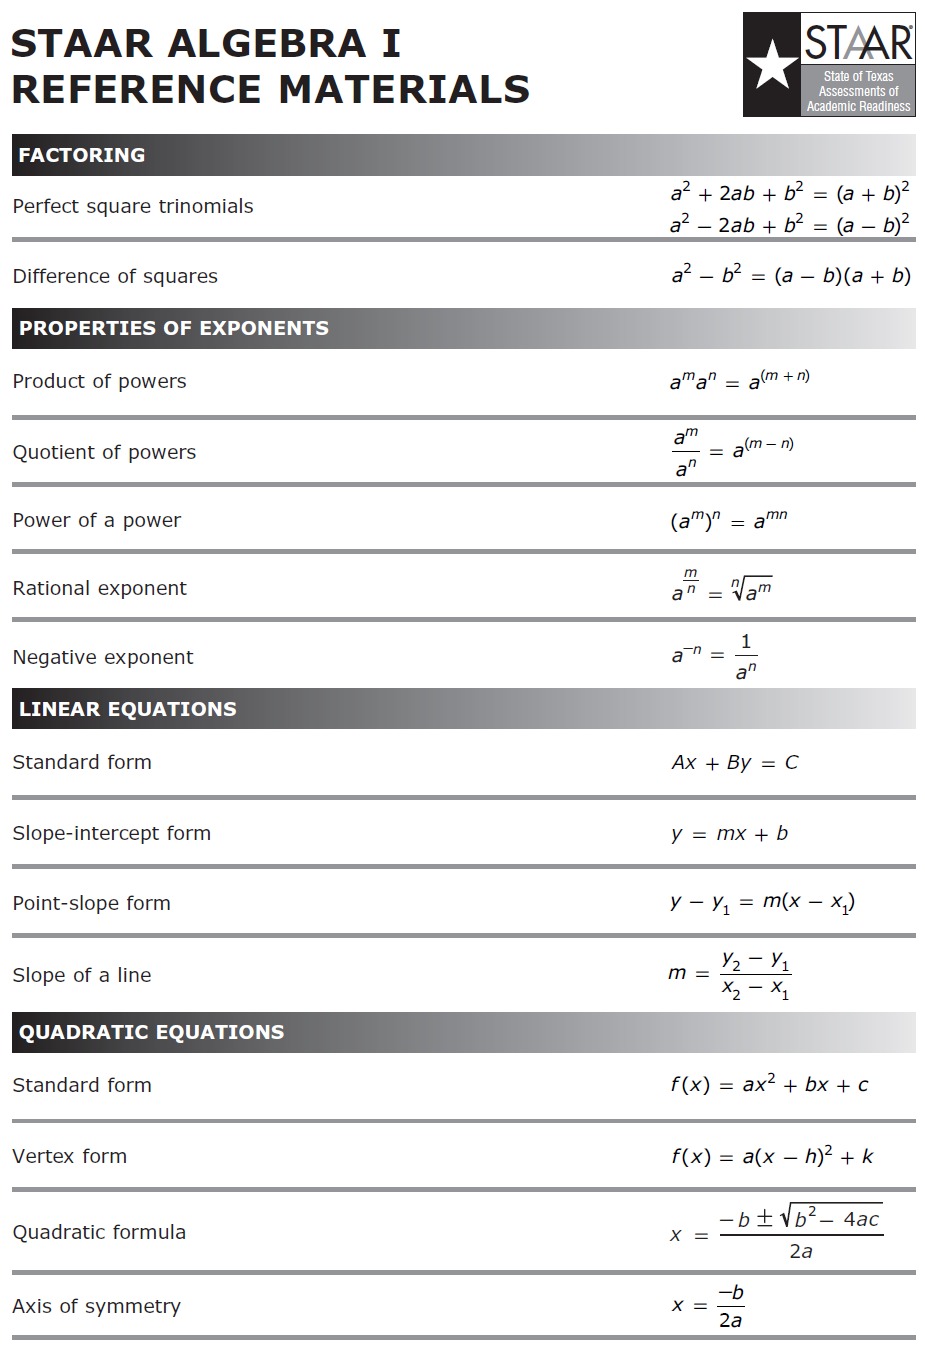 Formula Chart - Mr. Hinojosa's Algebra I